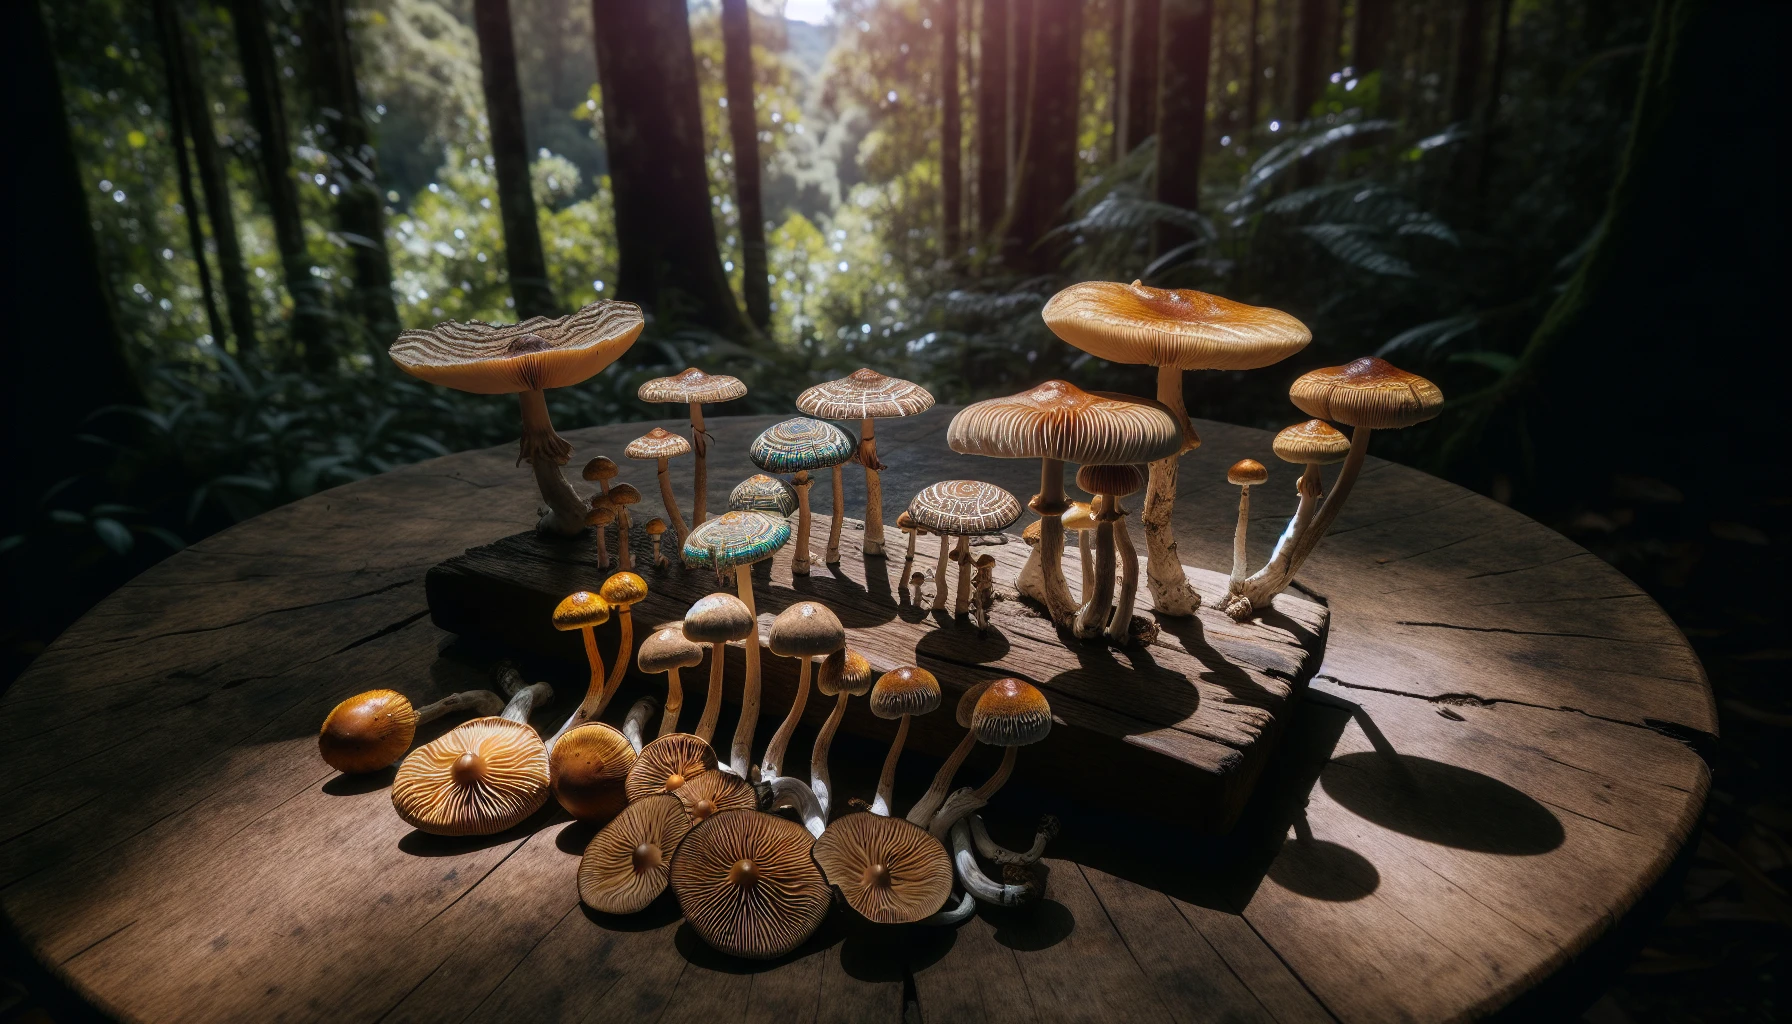 Psilocybin mushrooms on a table